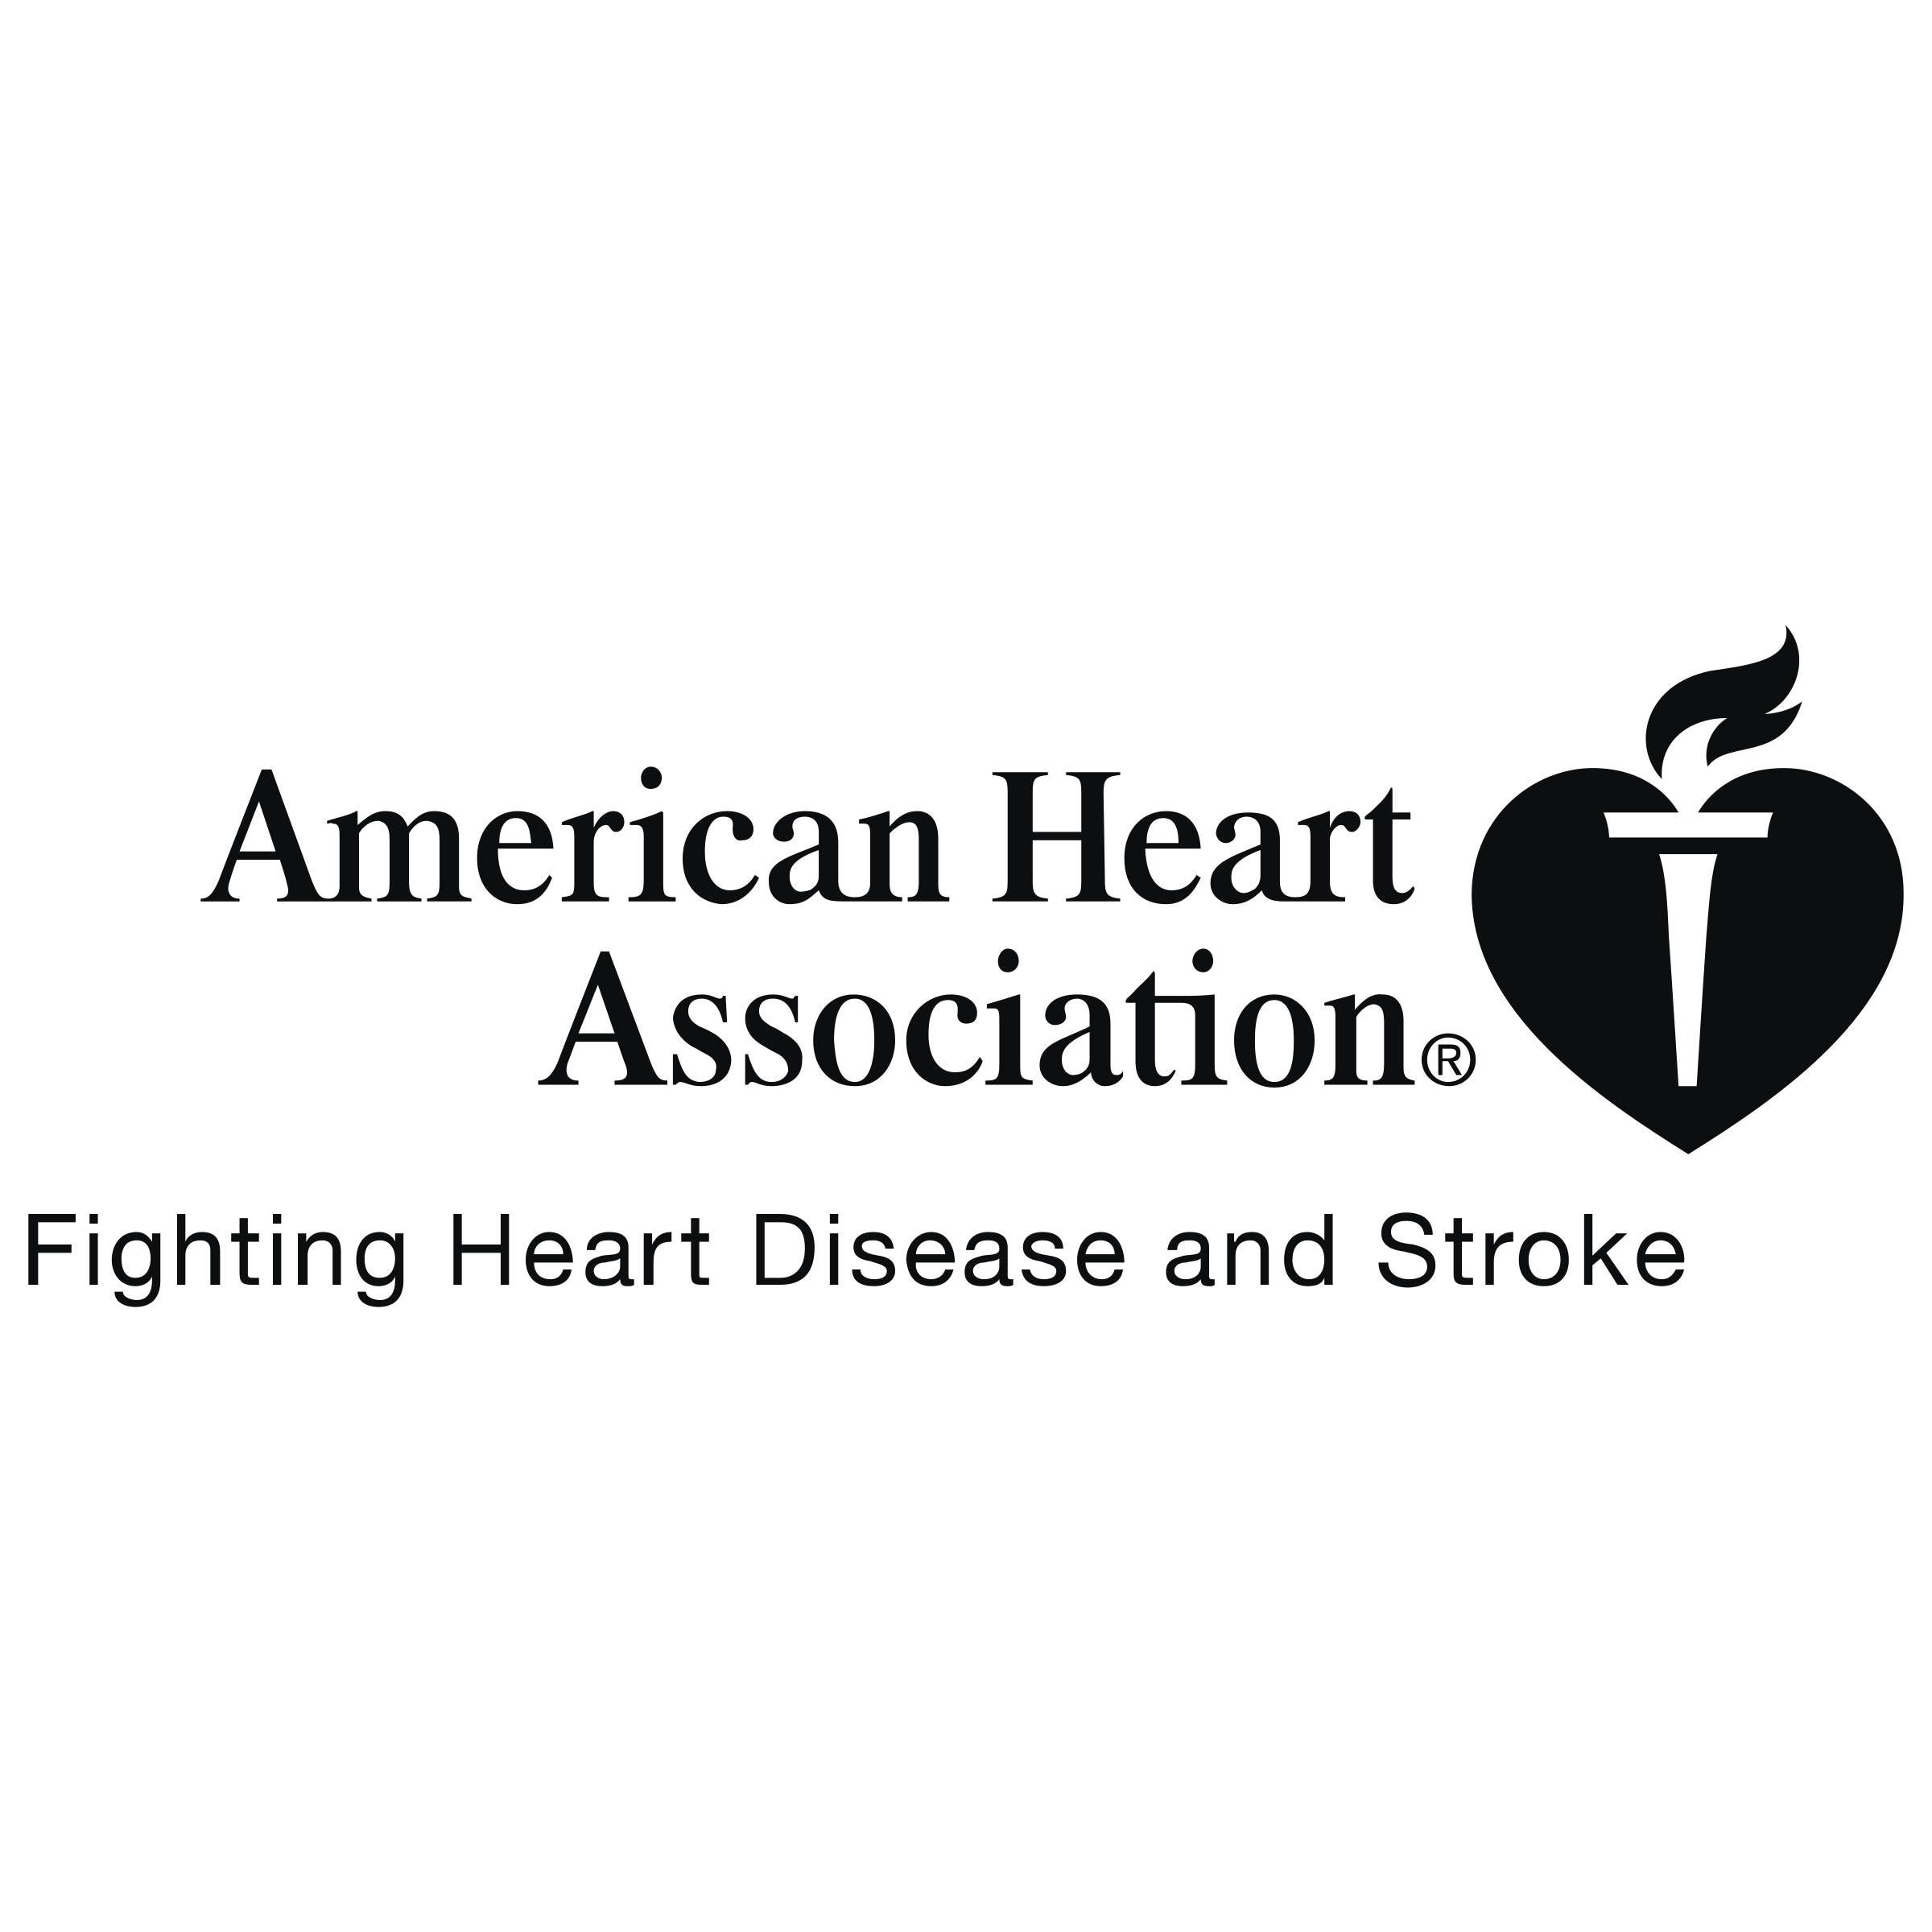 Американская кардиологическая Ассоциация. American Heart Association logo. Картинка  American Heart Association?. American Heart Association logo PNG. American heart